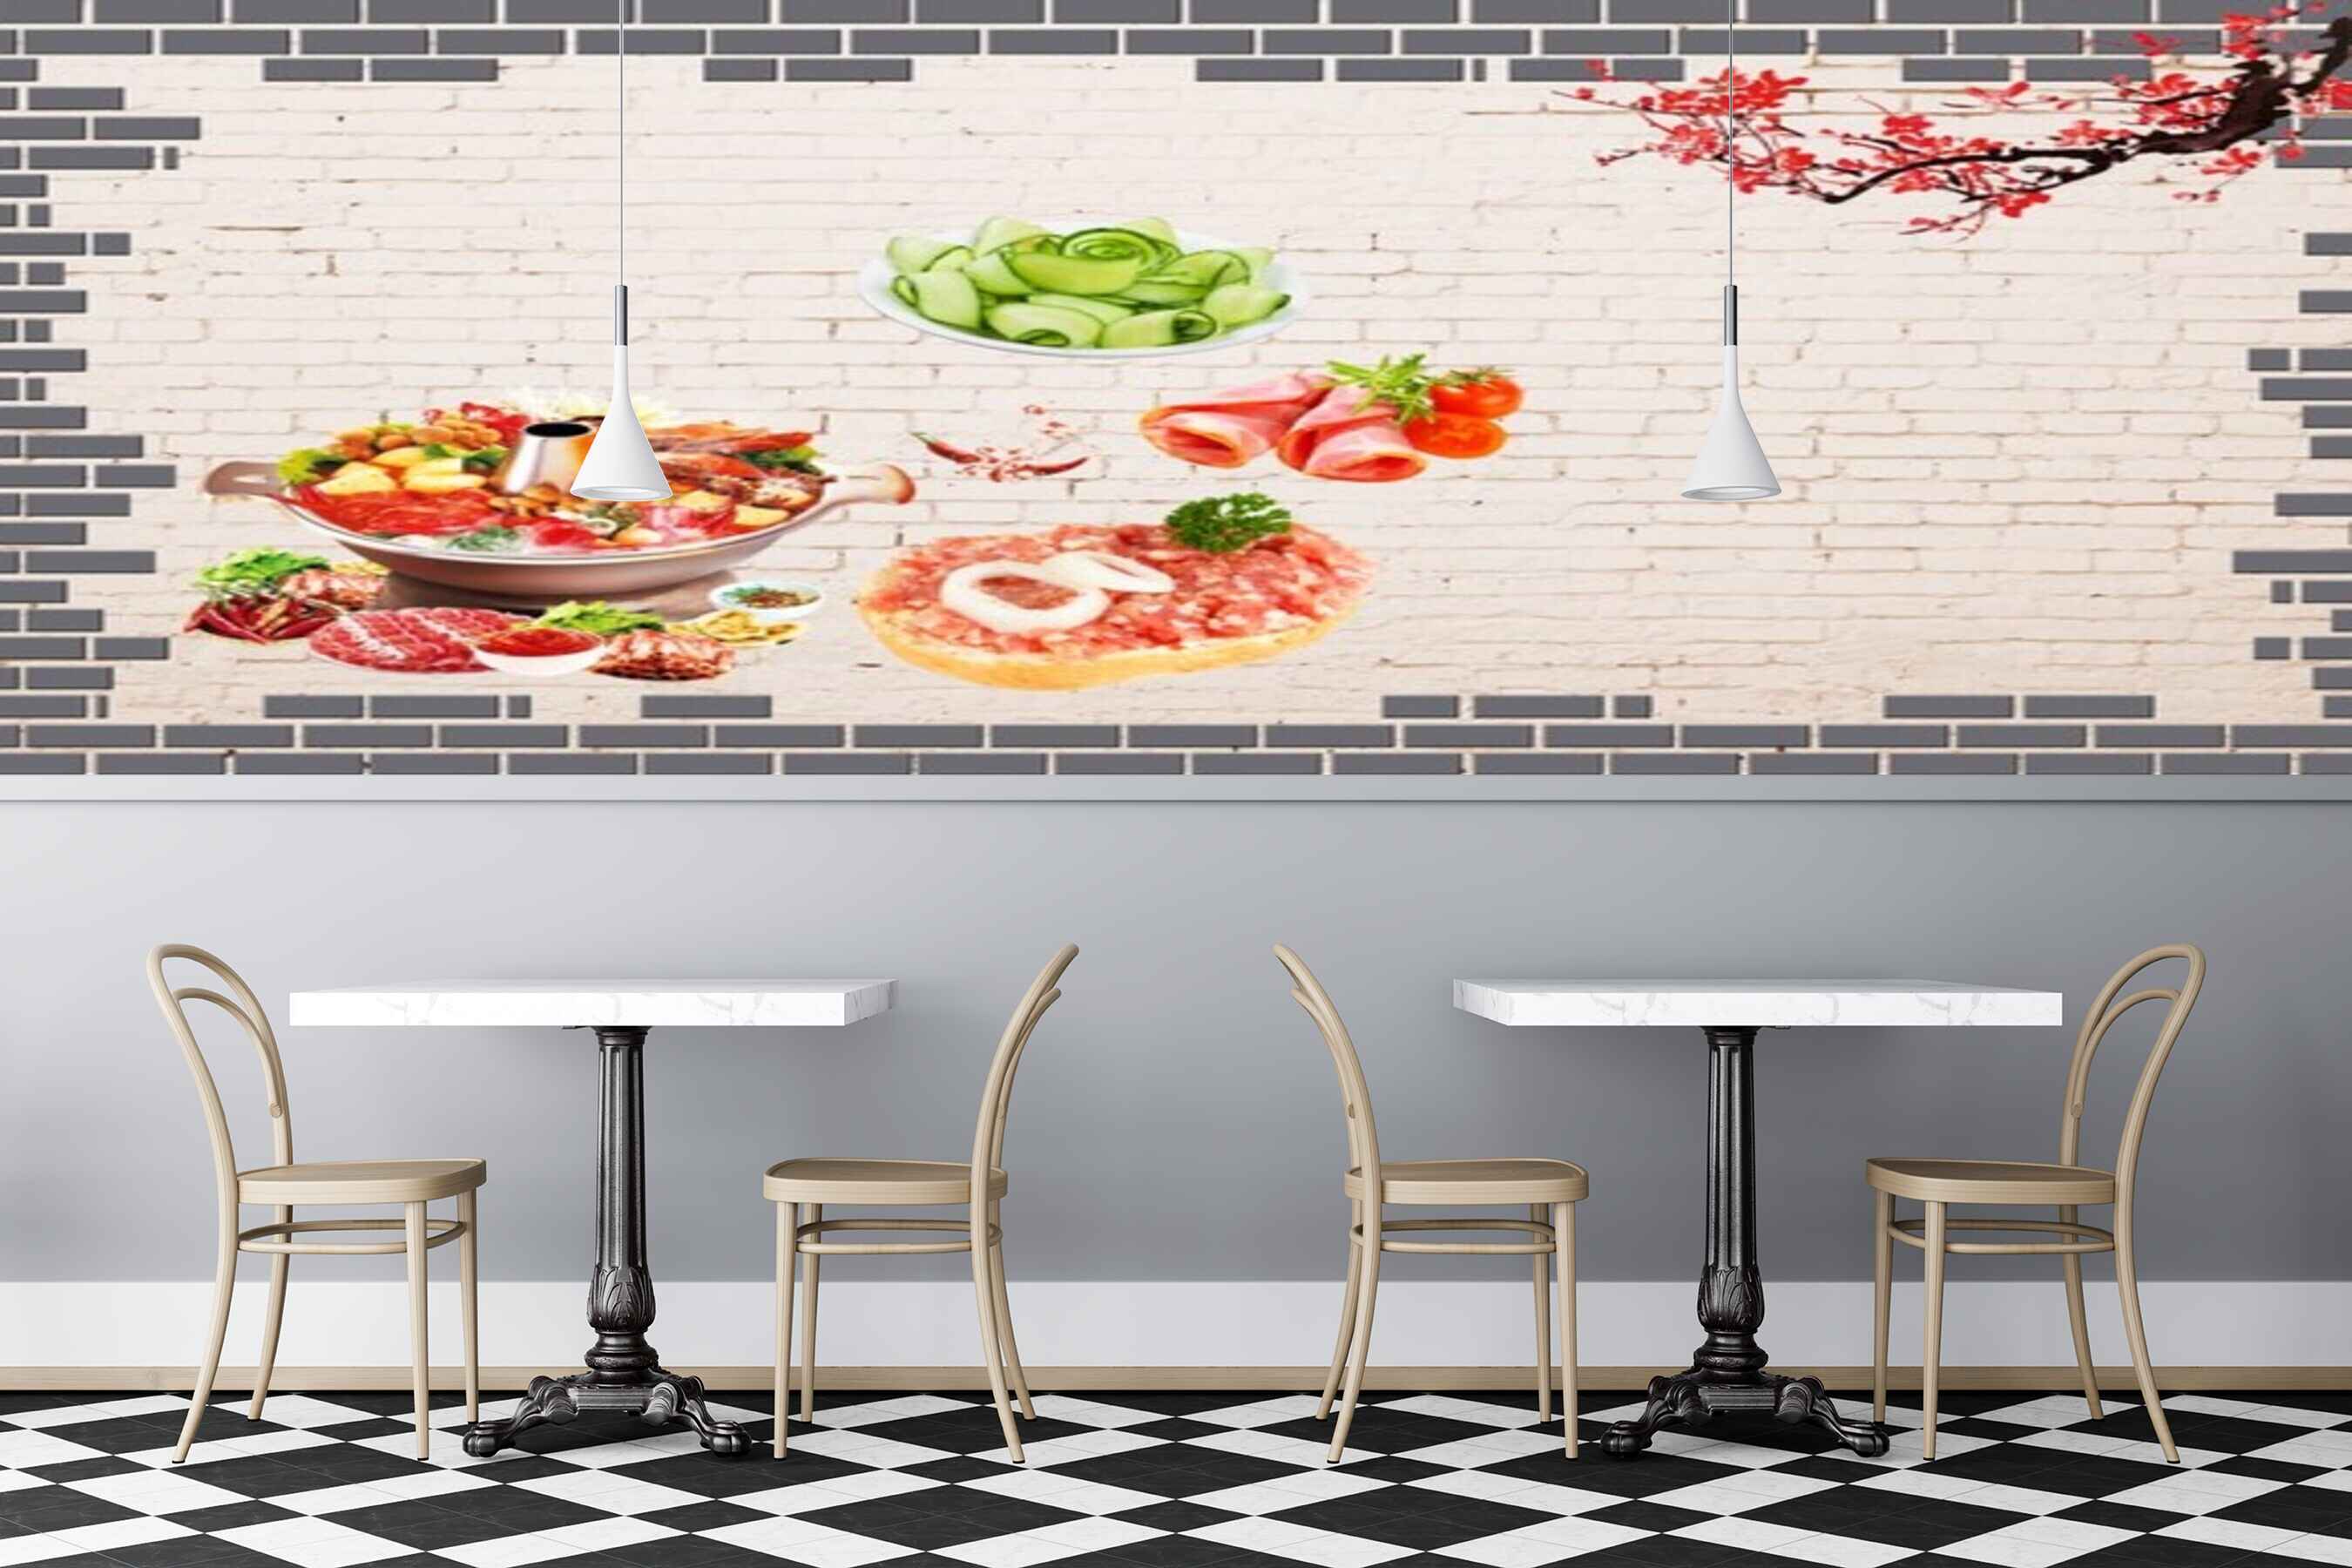 Avikalp MWZ3138 Meat Veggies Salads Pink Flowers HD Wallpaper for Cafe Restaurant